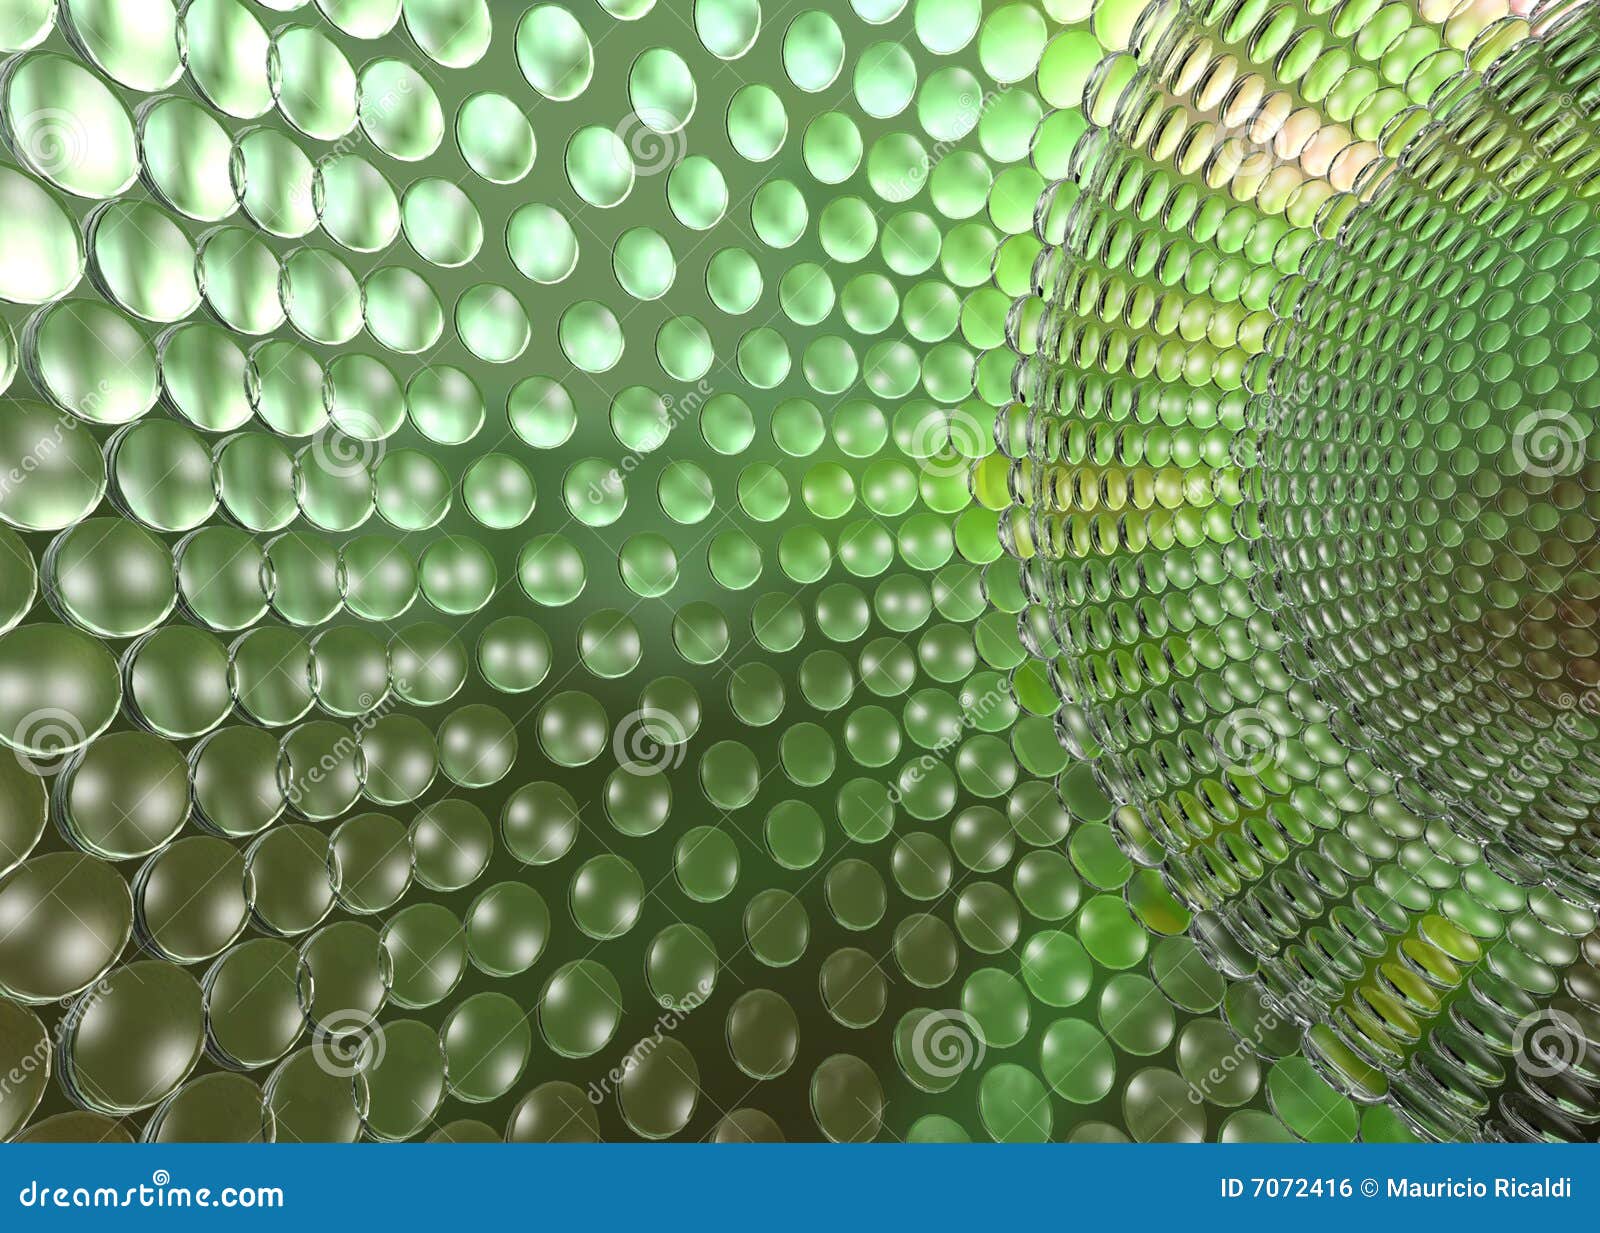 cristal tech tunel green